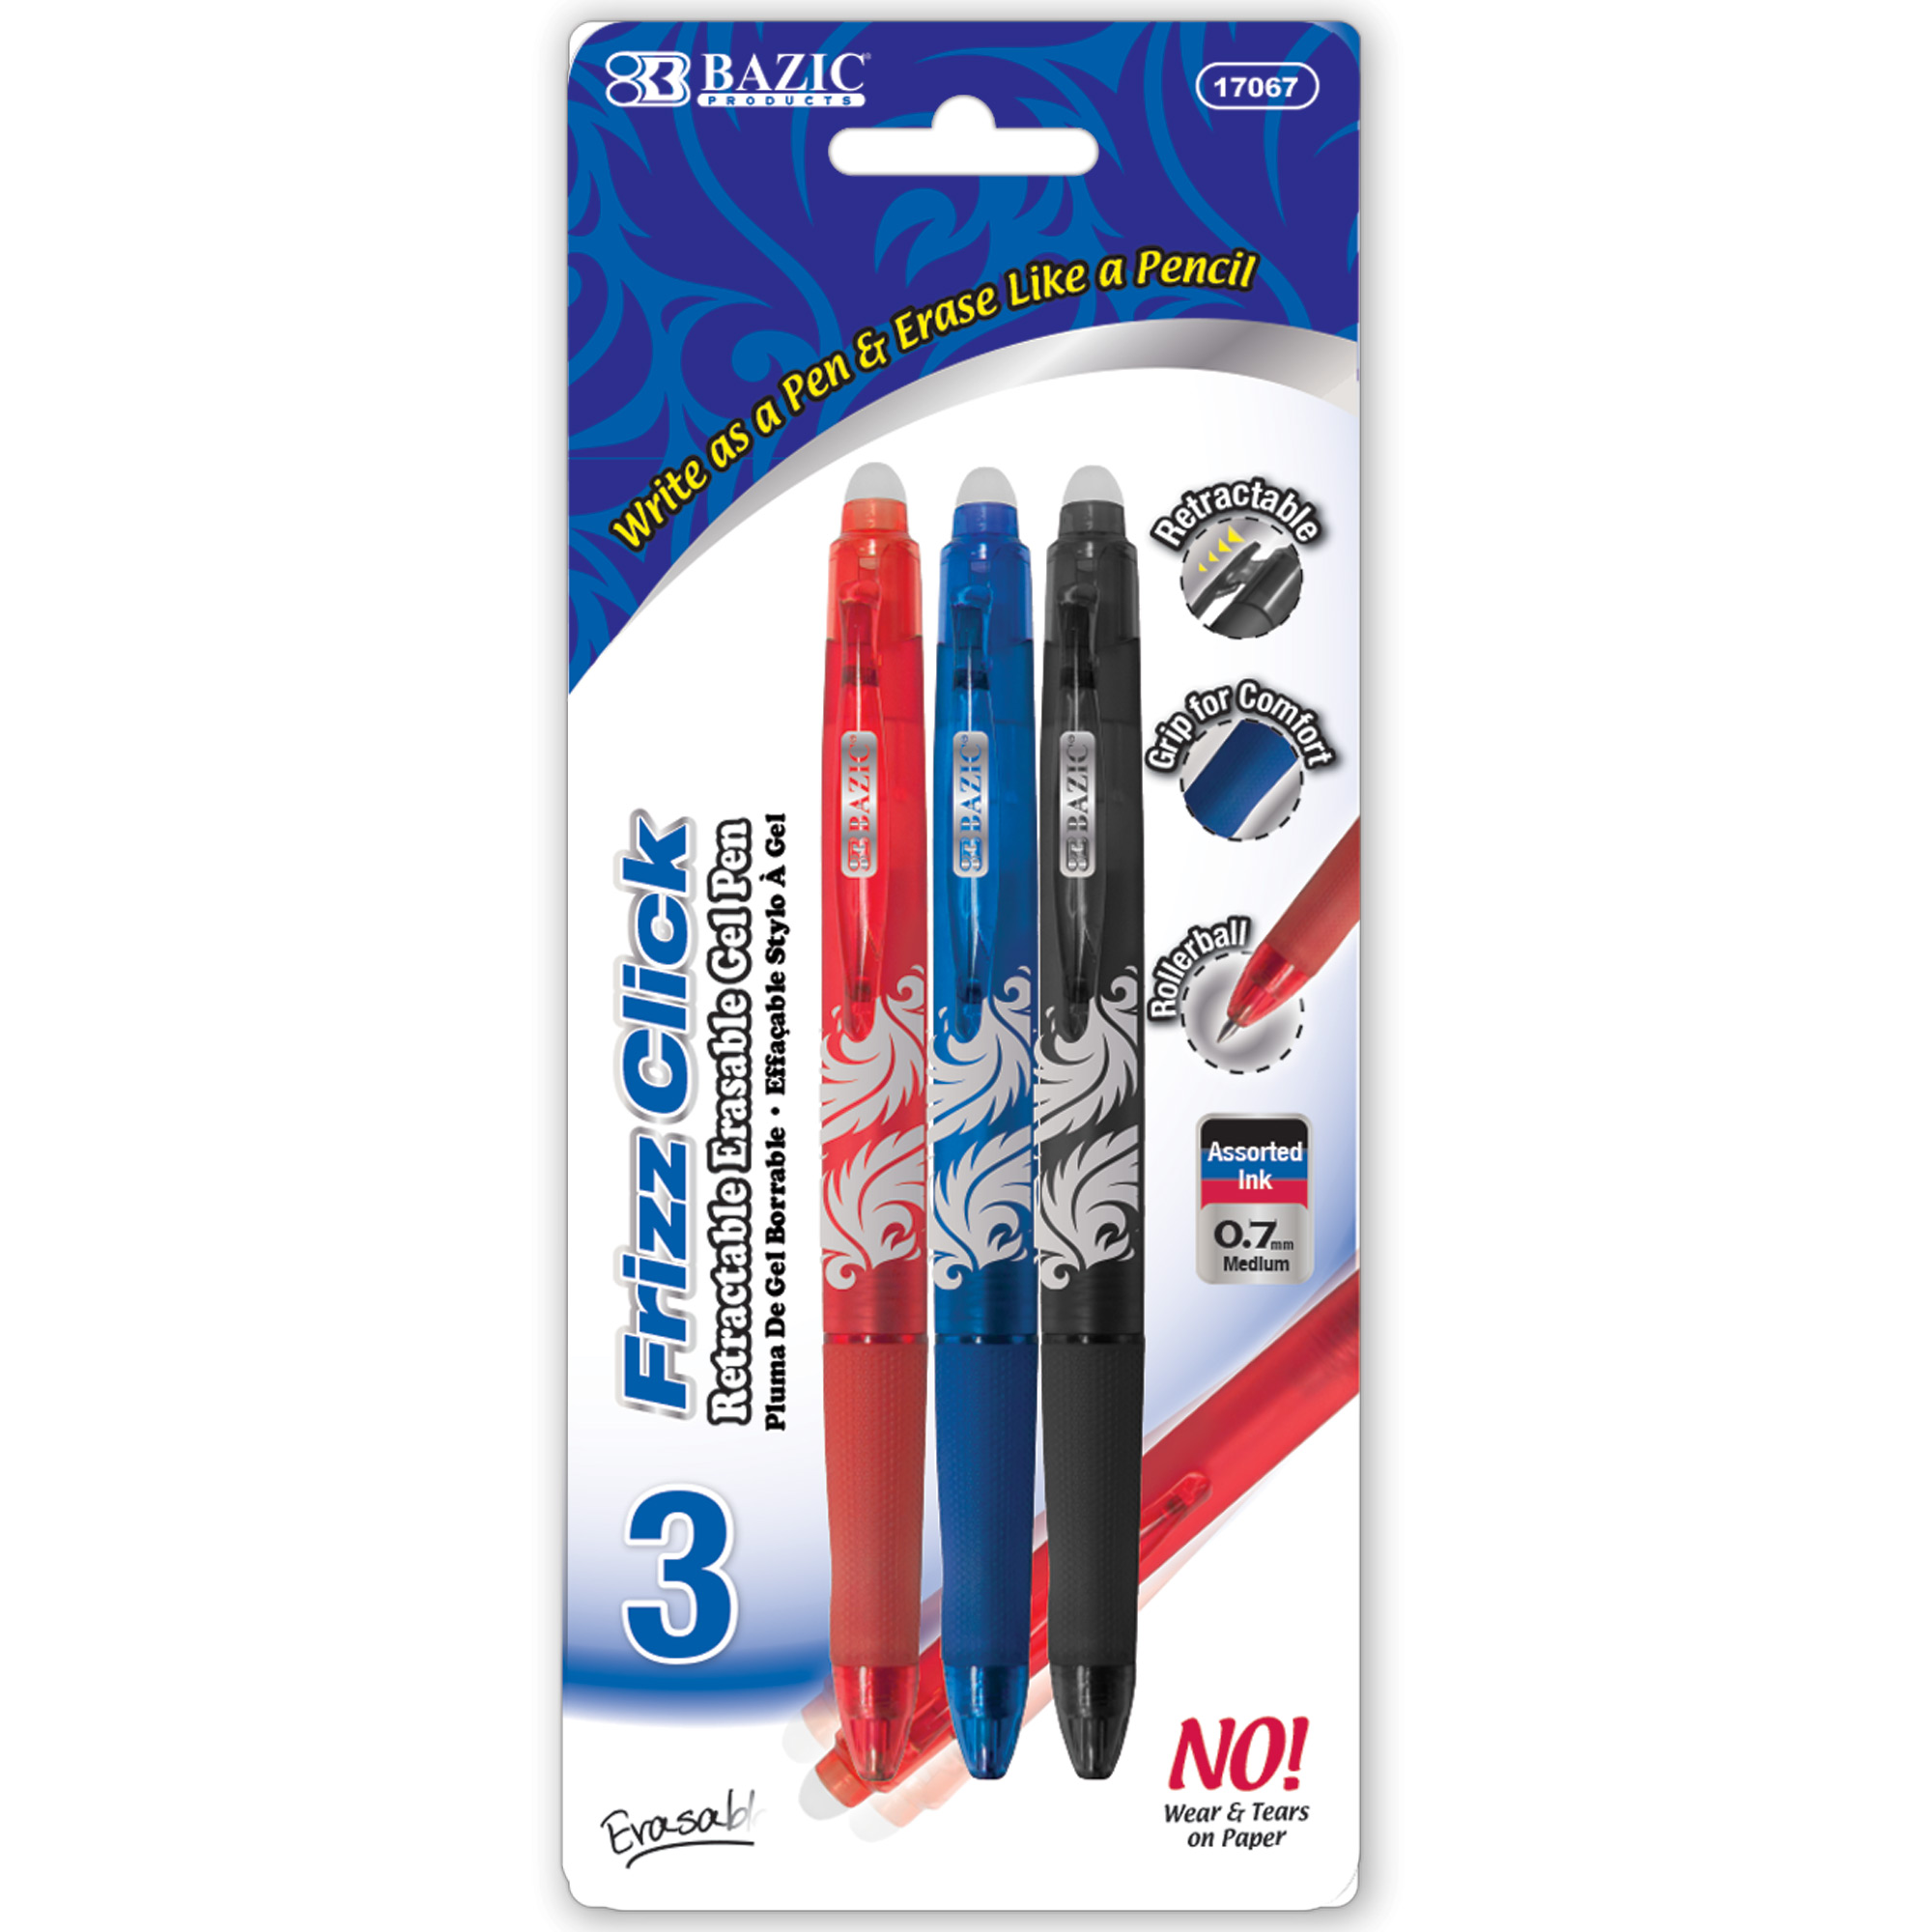 Colored Erasable Gel Pens - Set of 26